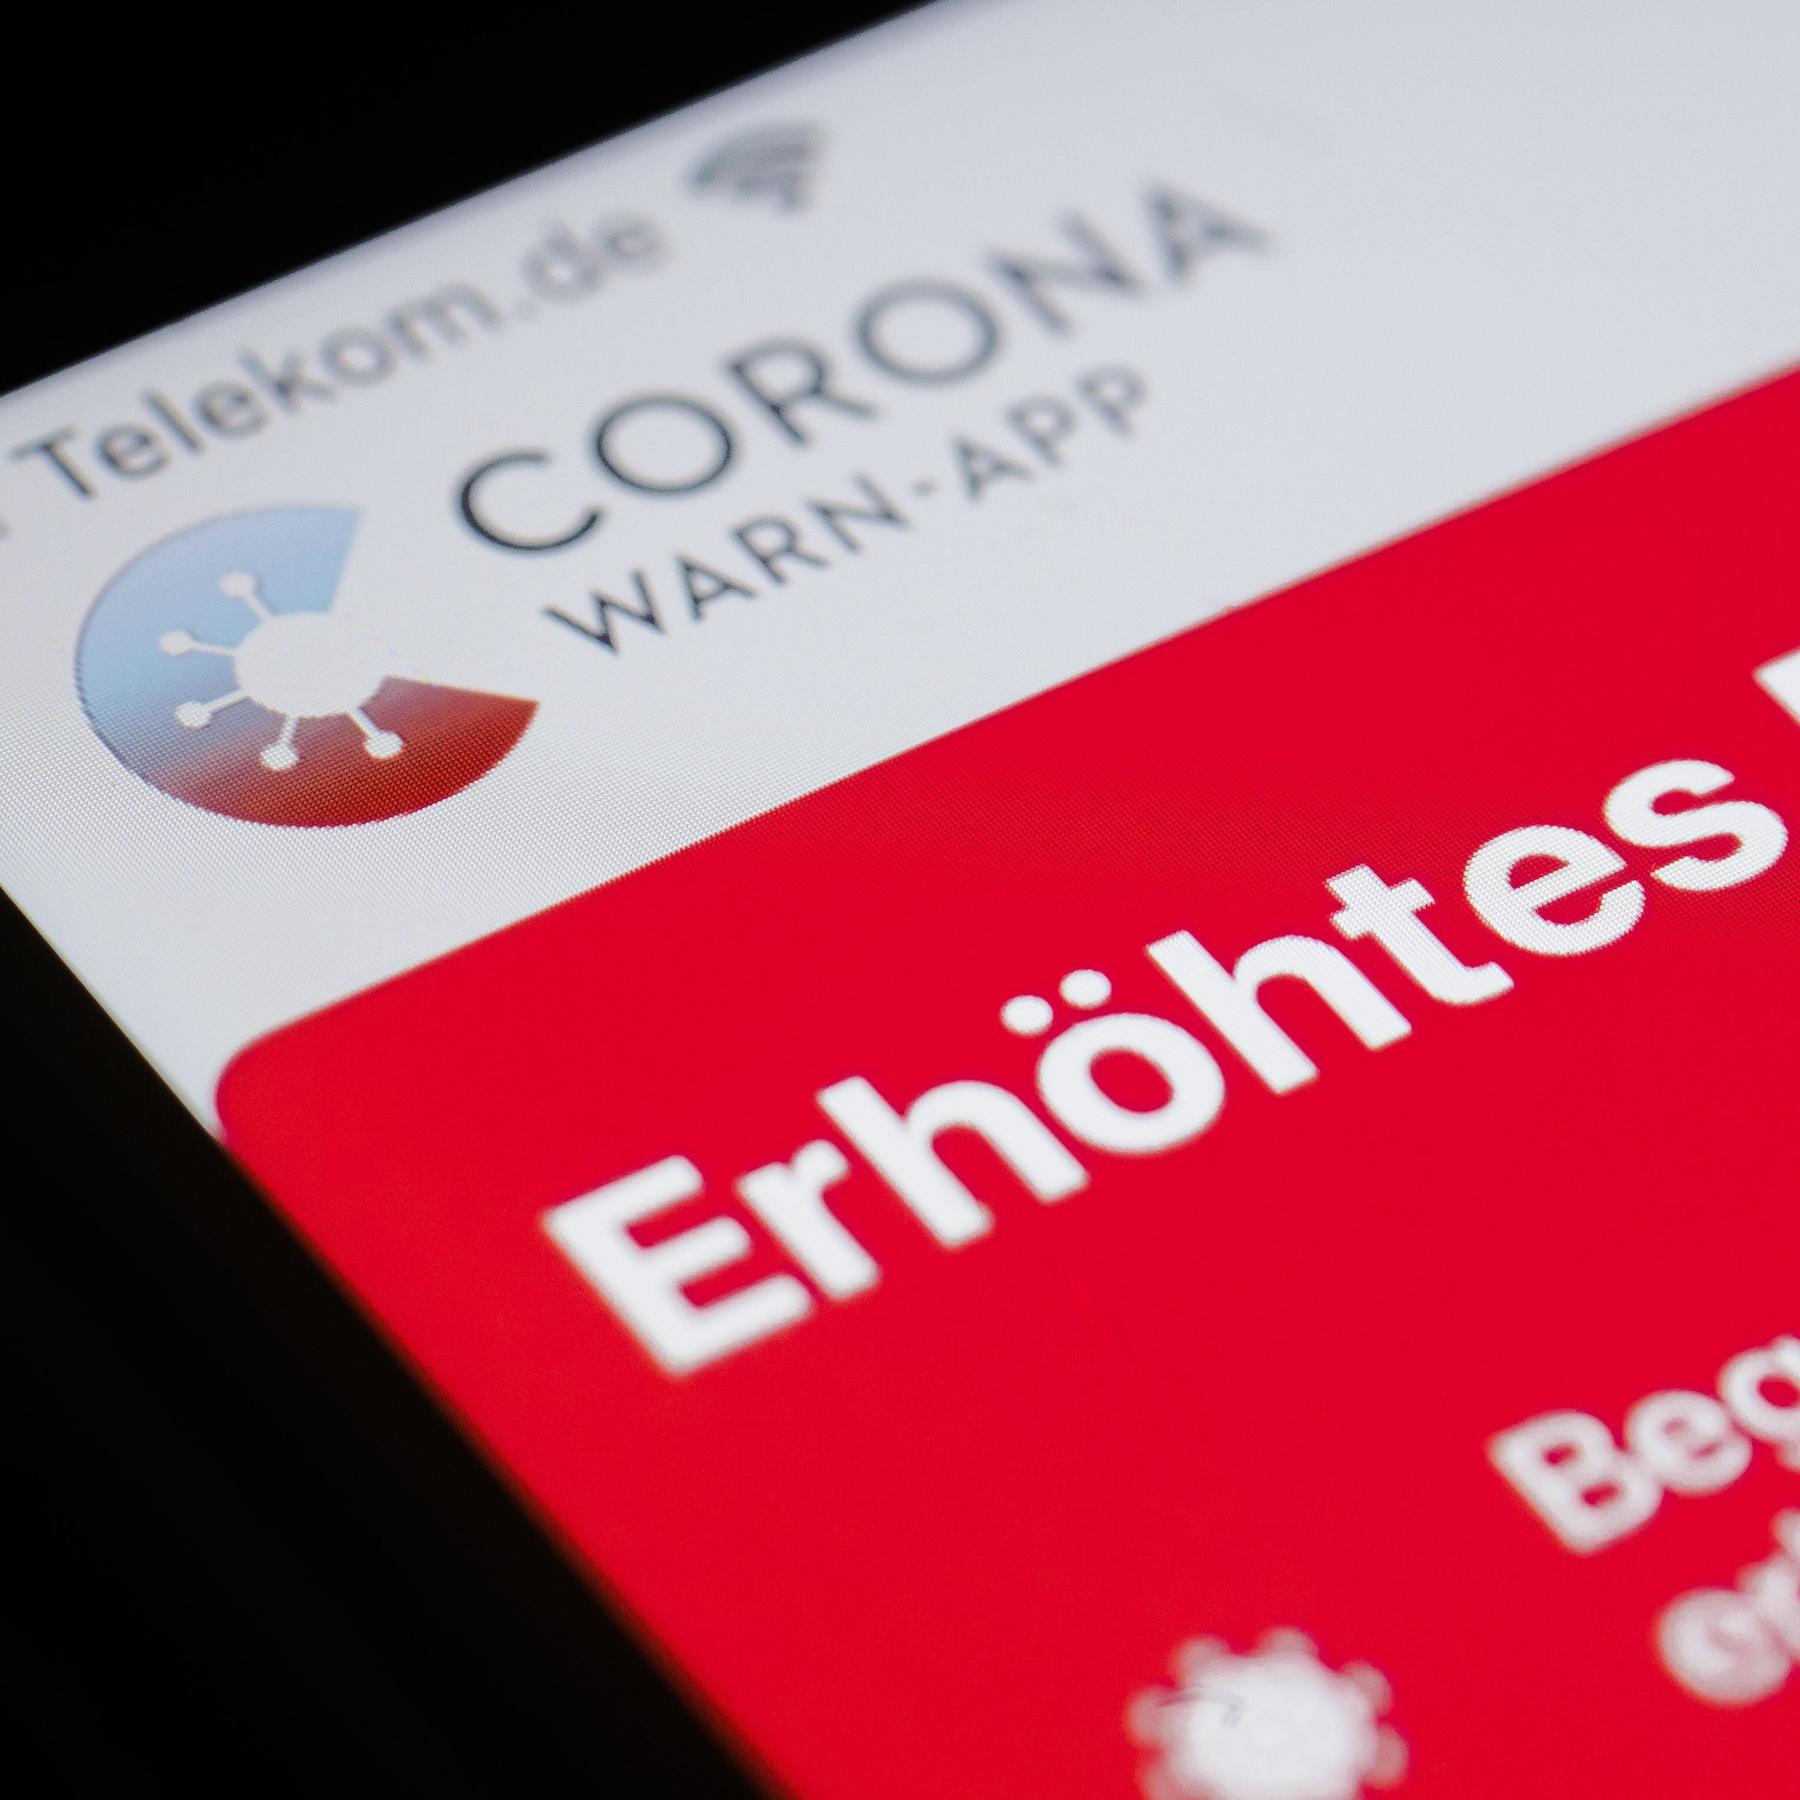 Corona-Warn-App - Hilfreiches Tool nach holprigem Start?